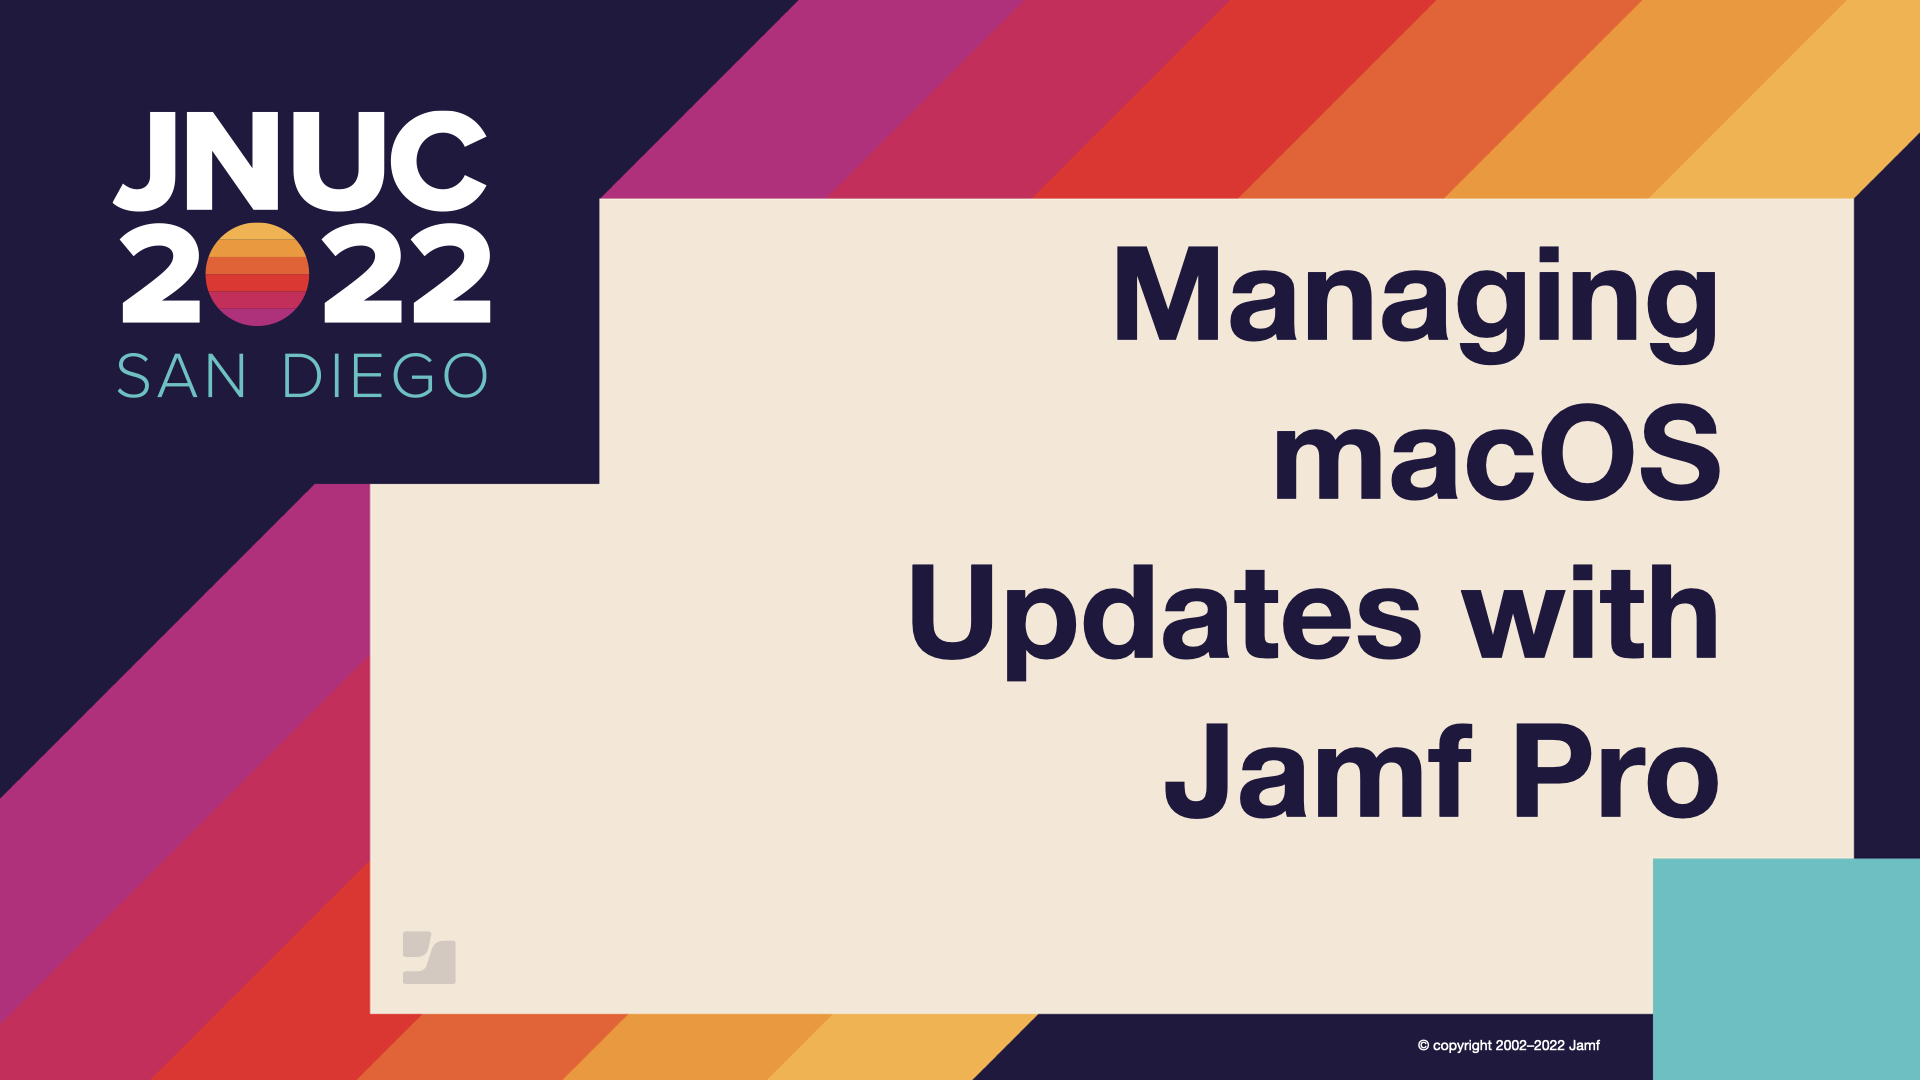 JNUC 2022 session: Managing macOS Updates with Jamf Pro